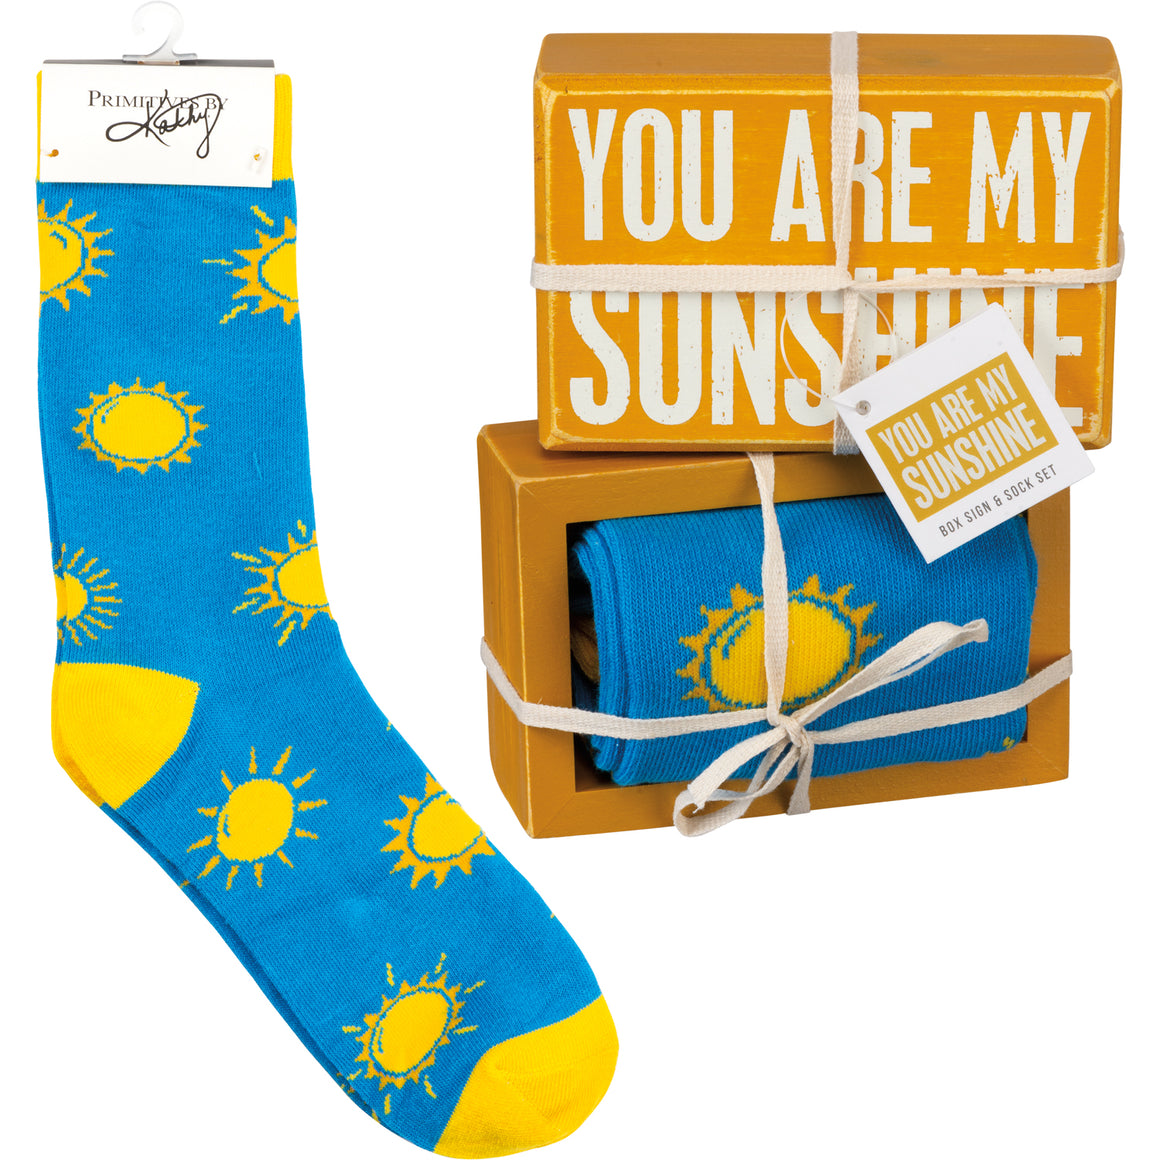 You Are My Sunshine Socks & Box Sign Gift Set